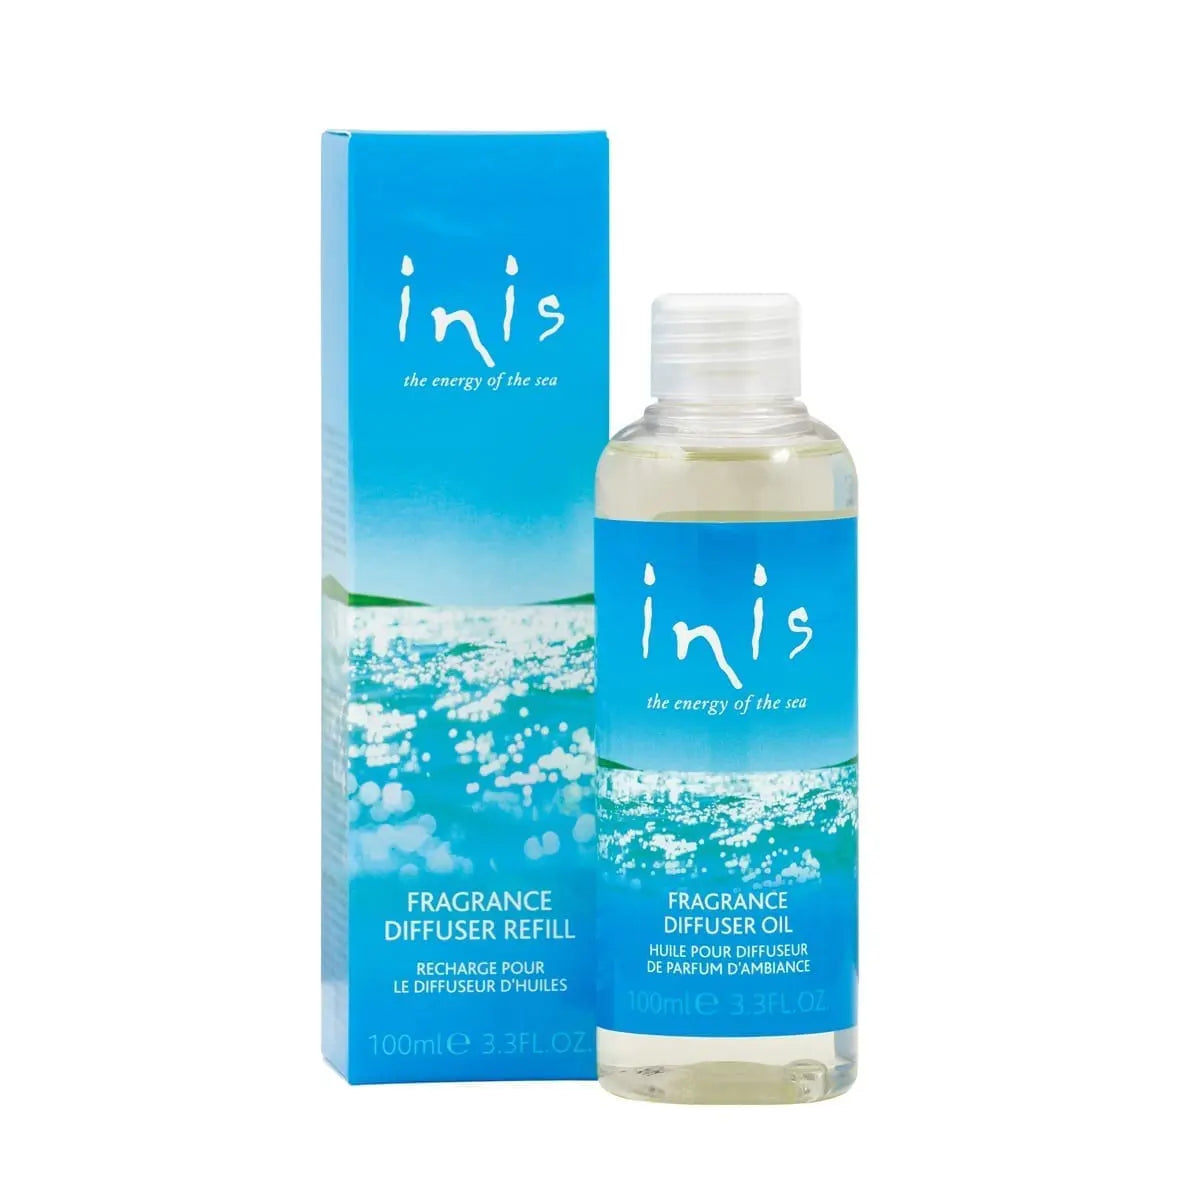 Inis Fragrance Diffuser REFILL ( 3.3 fl. oz.)